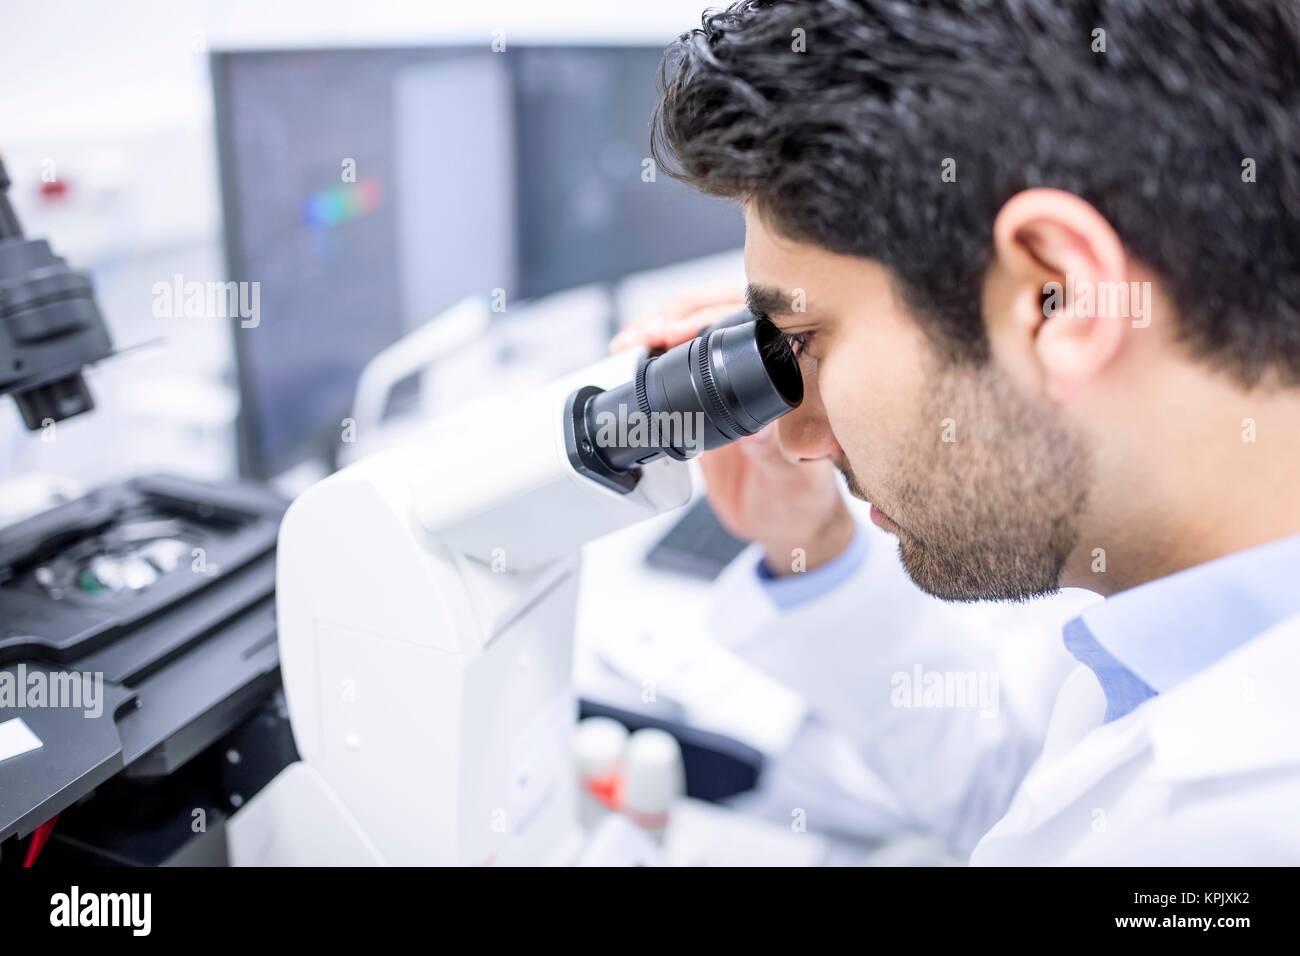 Male scientist using microscope, close up. Stock Photo